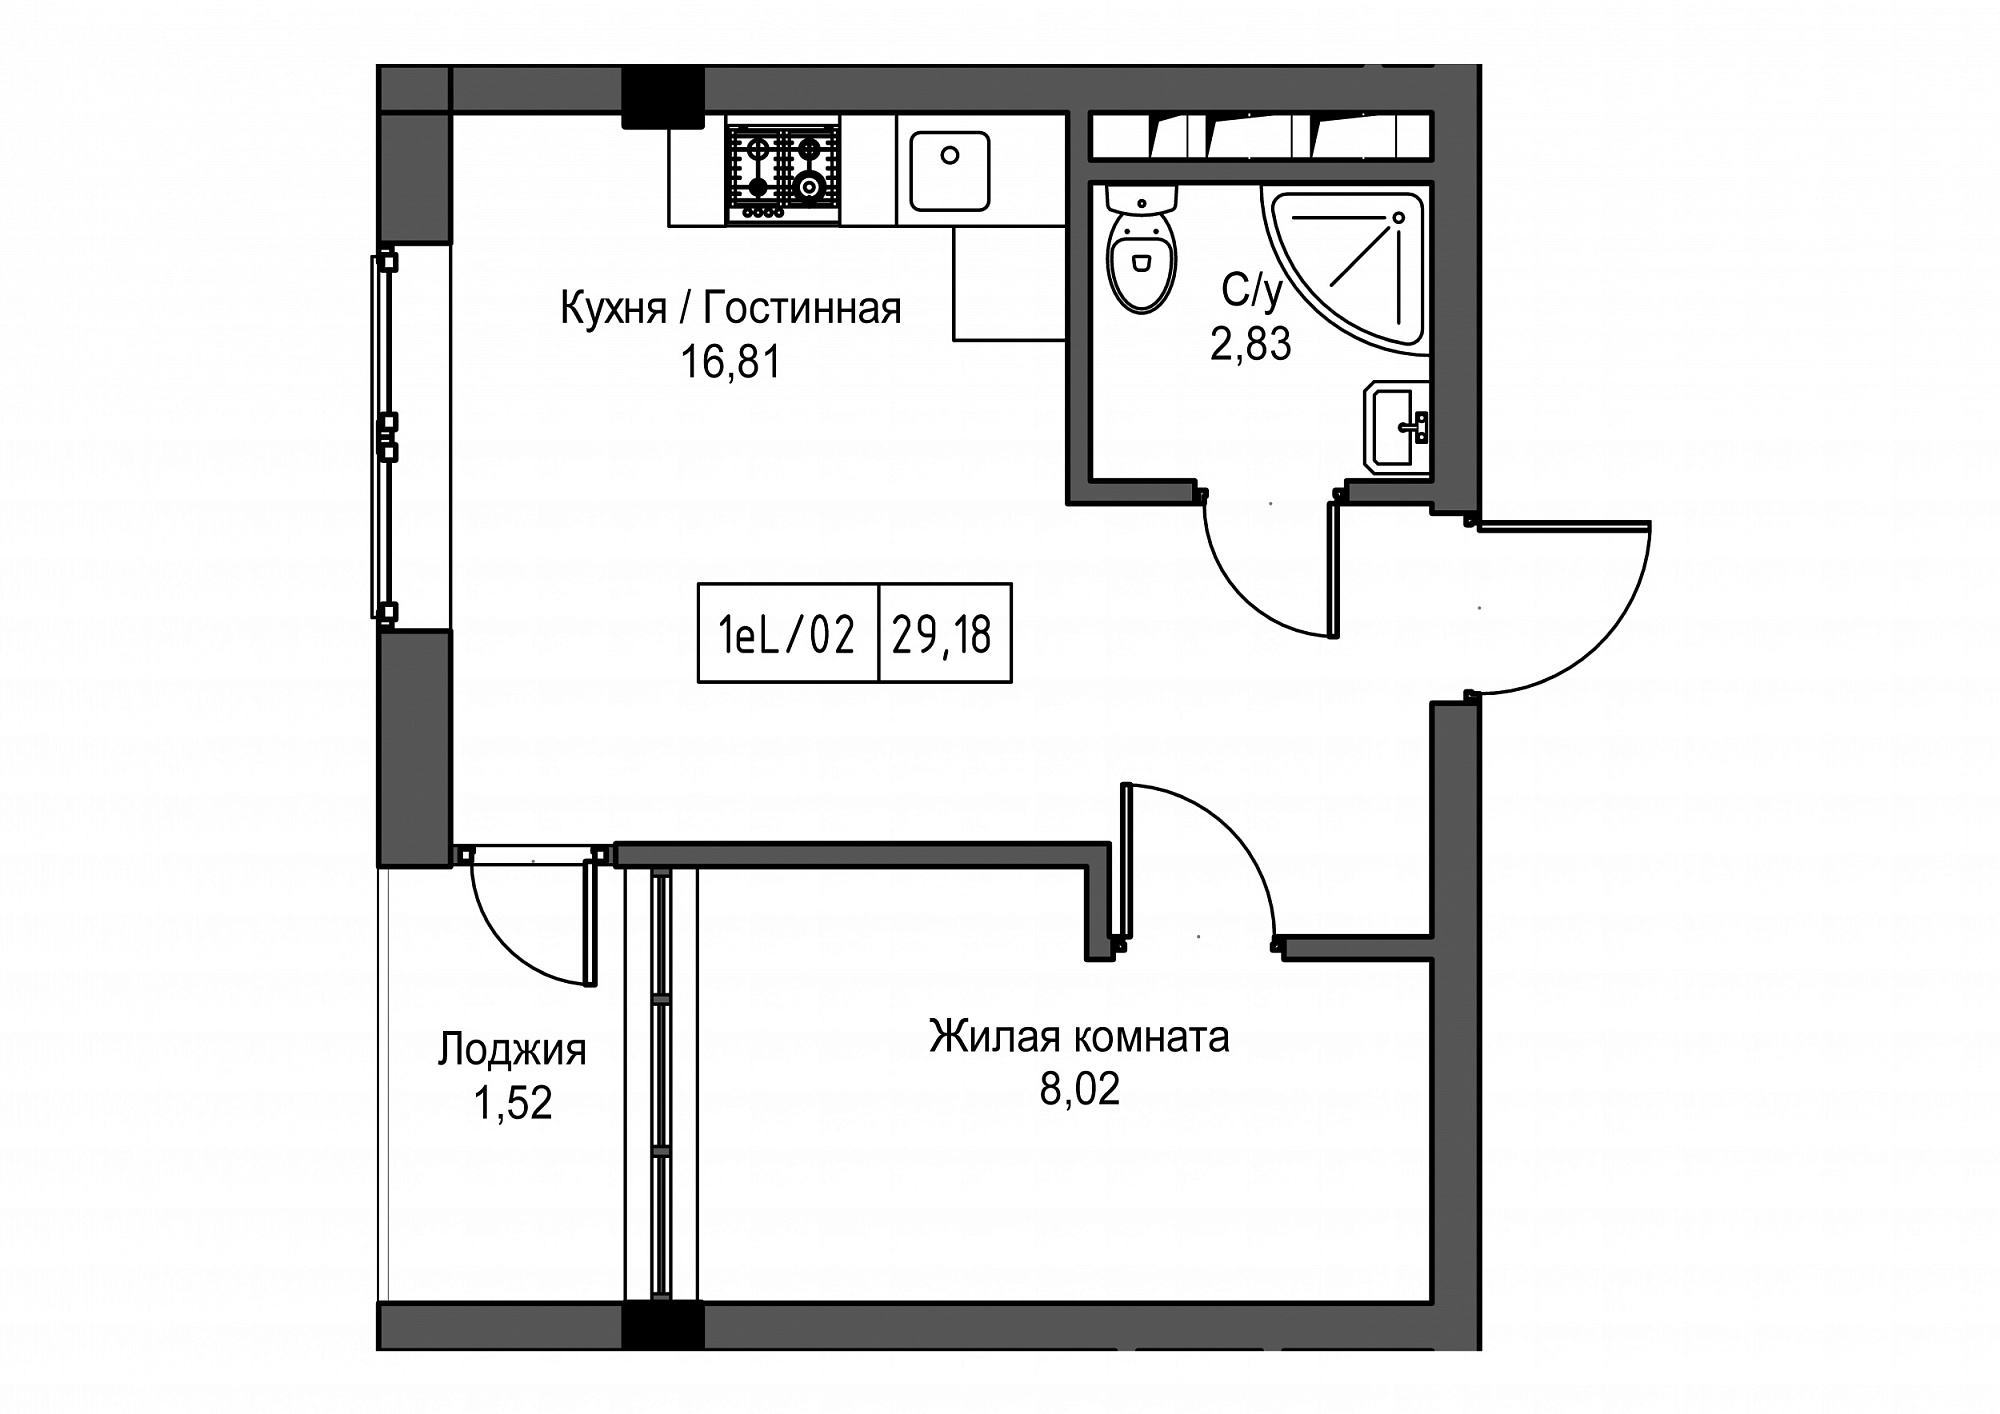 Planning 1-rm flats area 29.18m2, UM-002-02/0096.